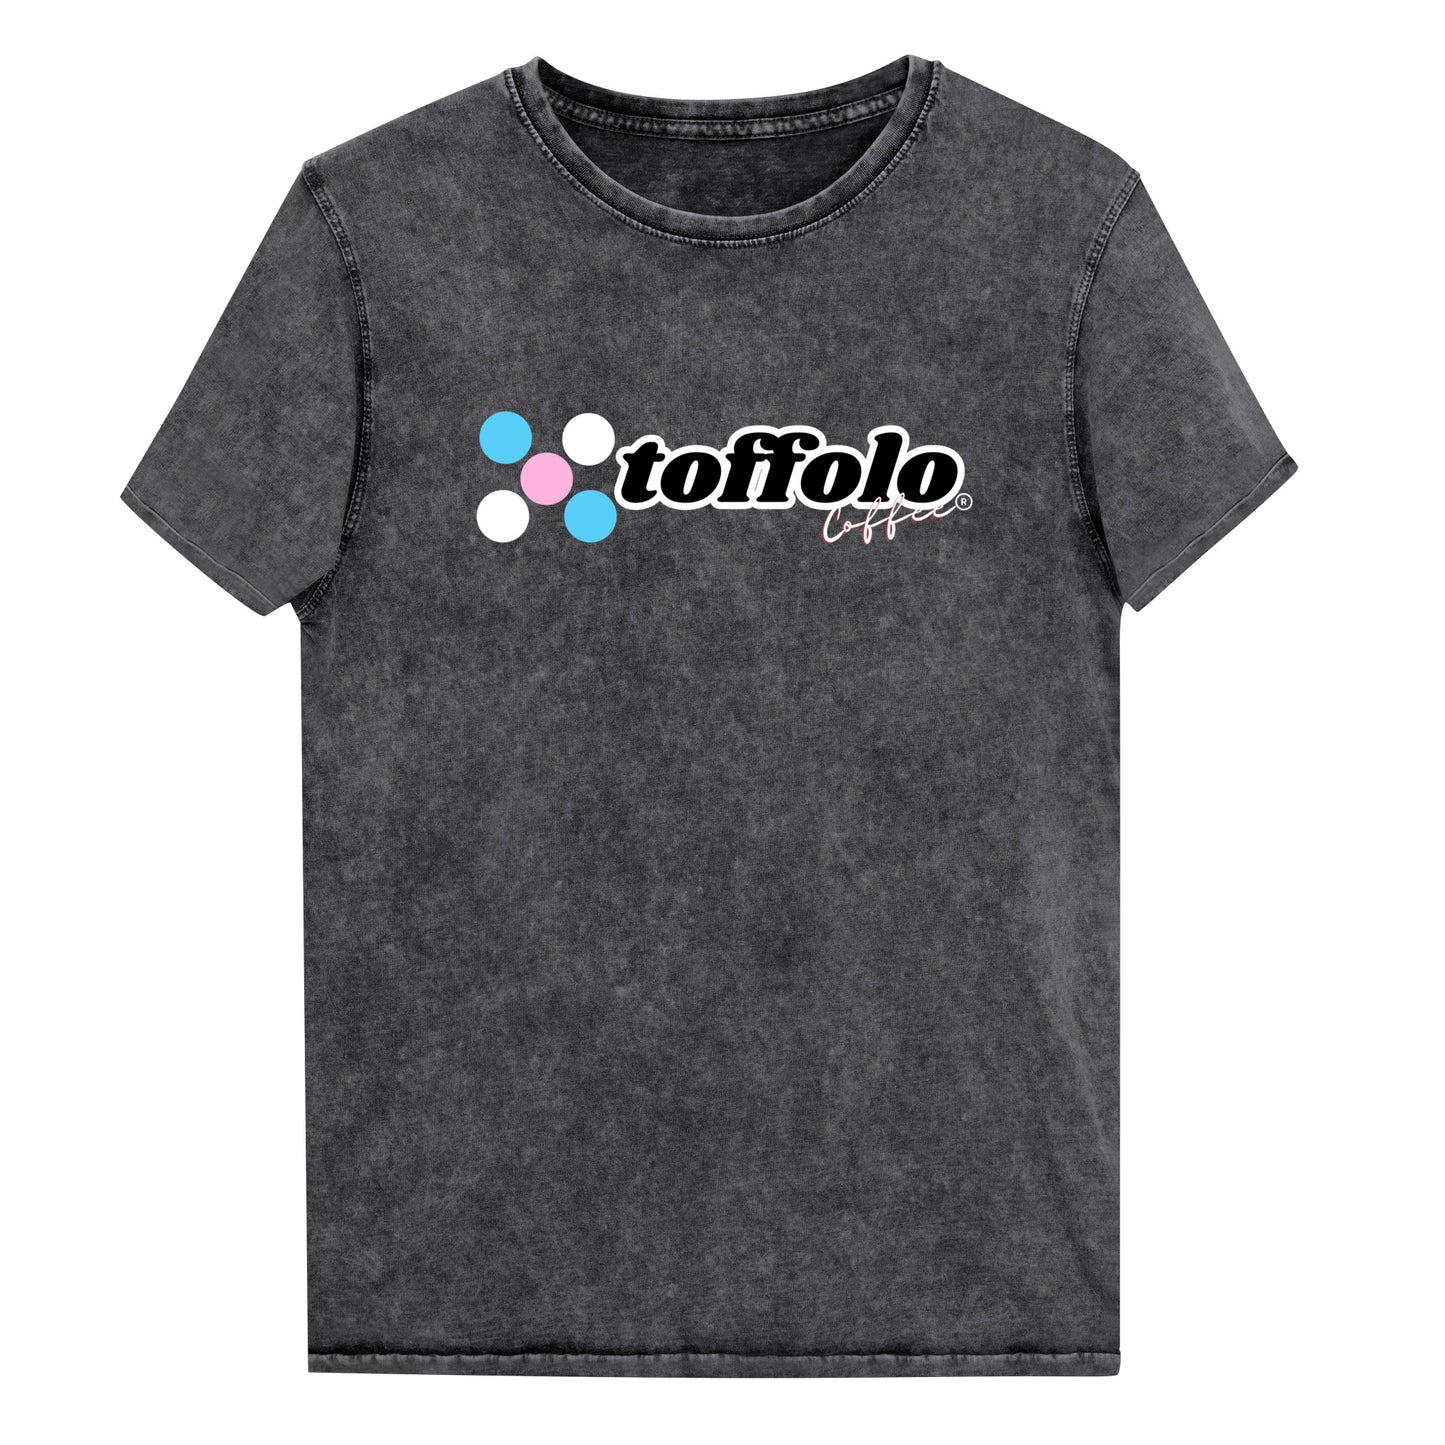 toffolo Got Coffee Denim T-Shirt